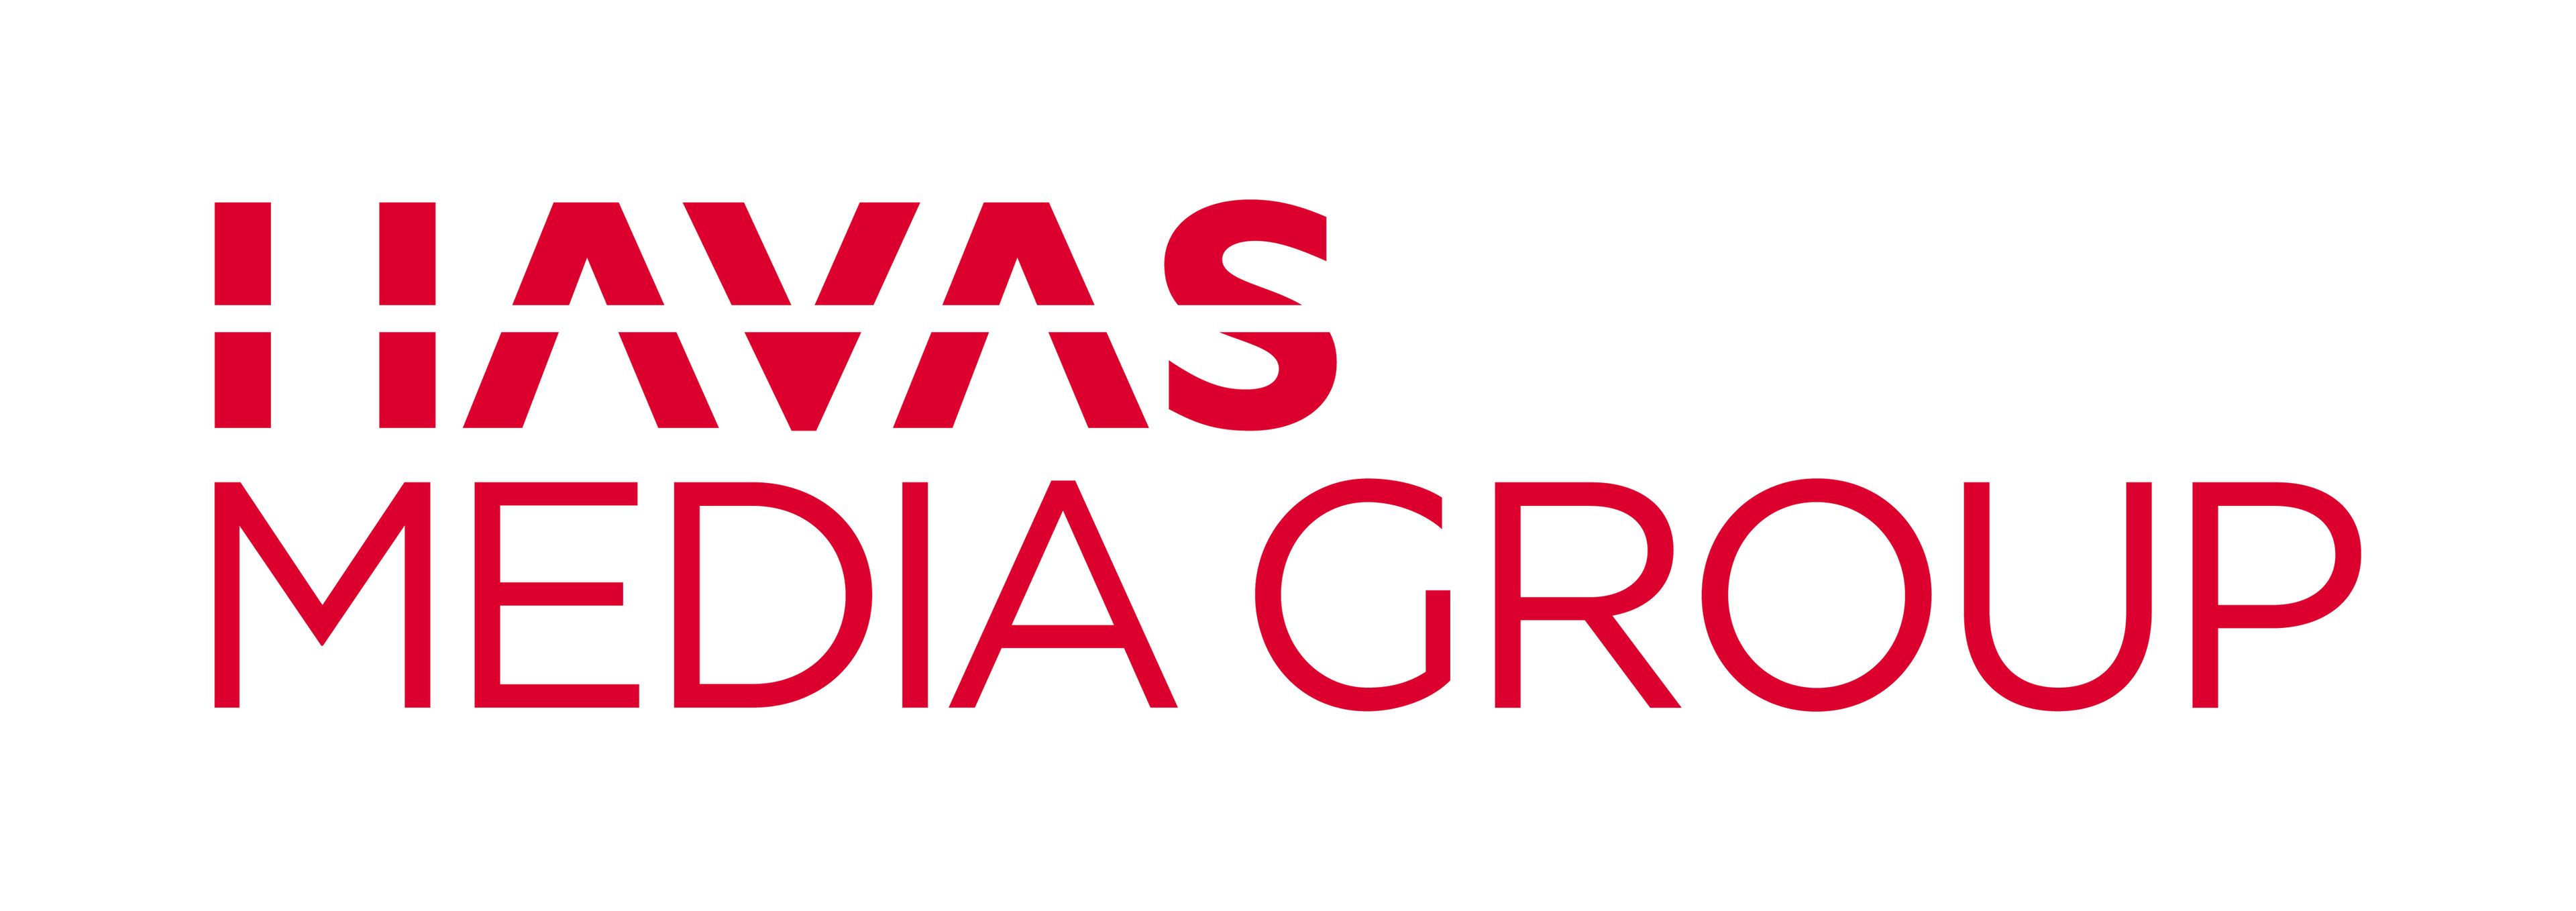 Patrocina Havas Media Group